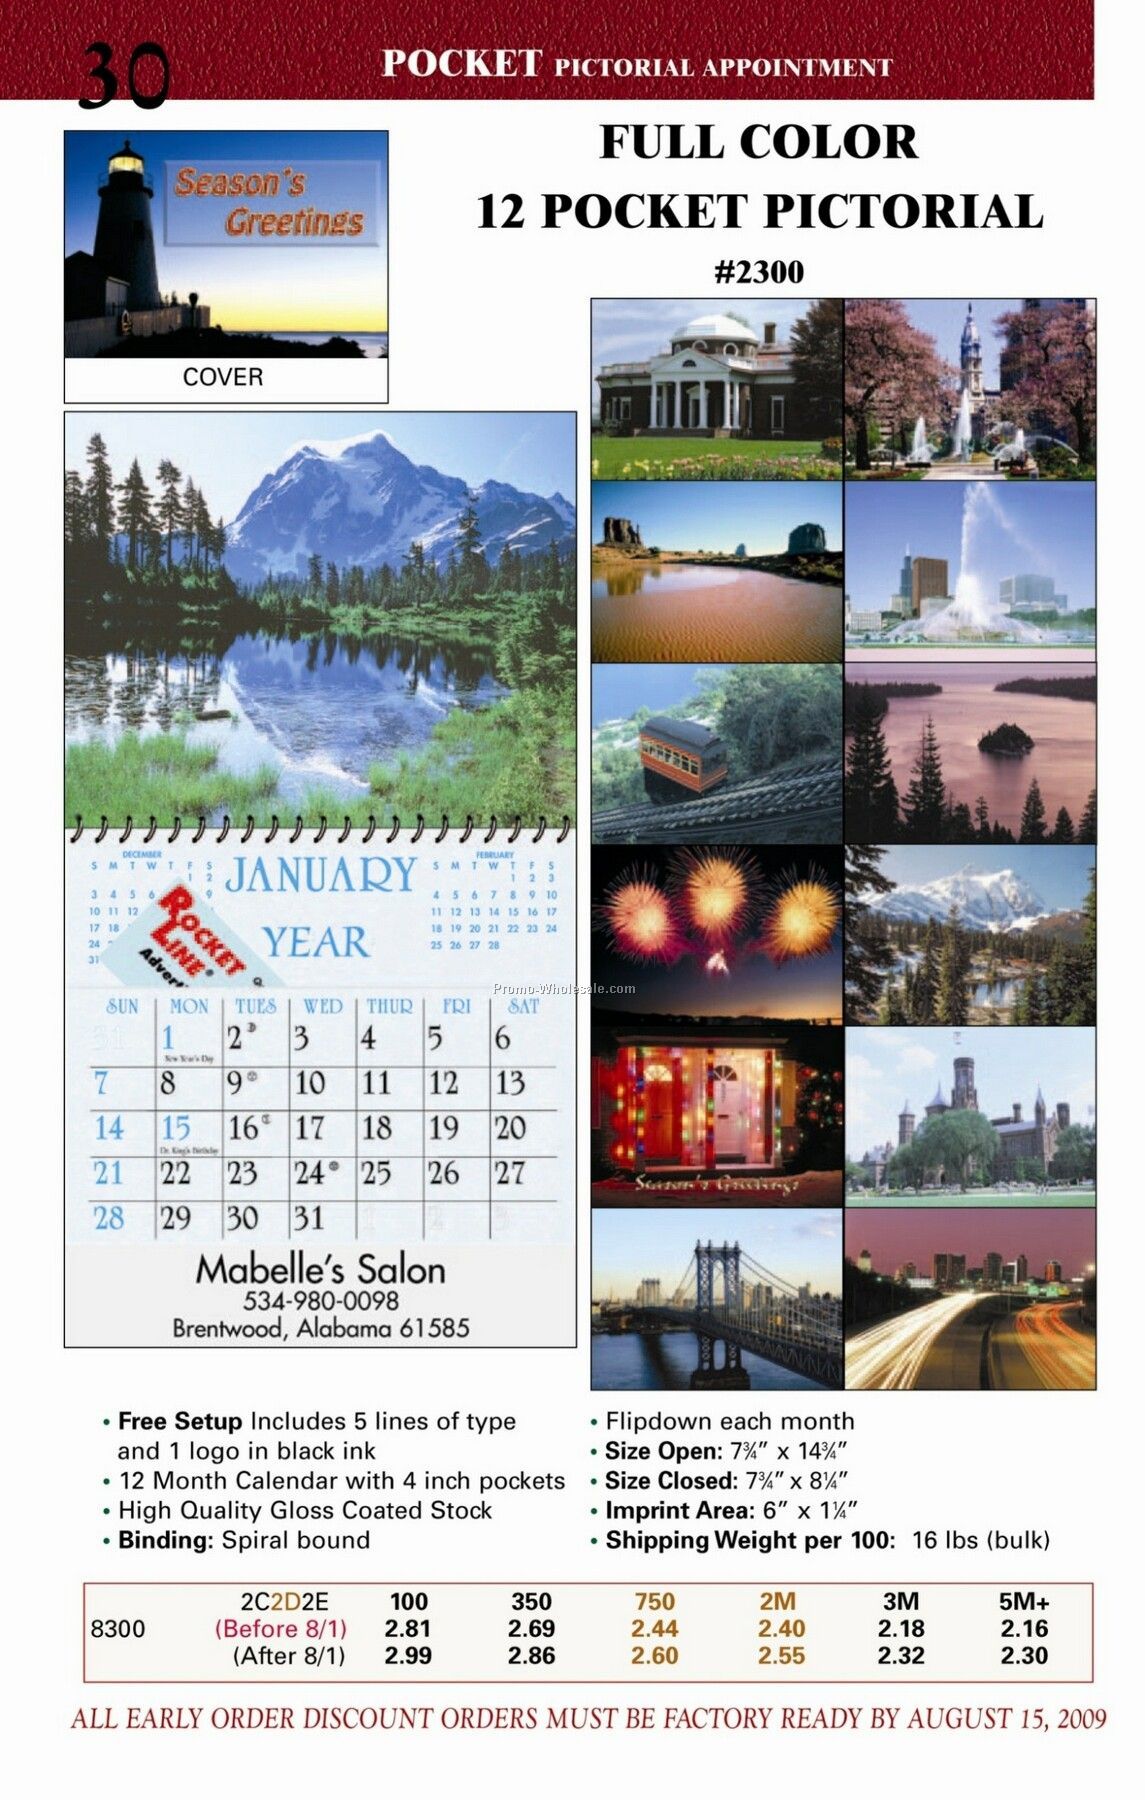 7-3/4"x8-1/4" Pocket Pictorial- 12 Pocket Calendar